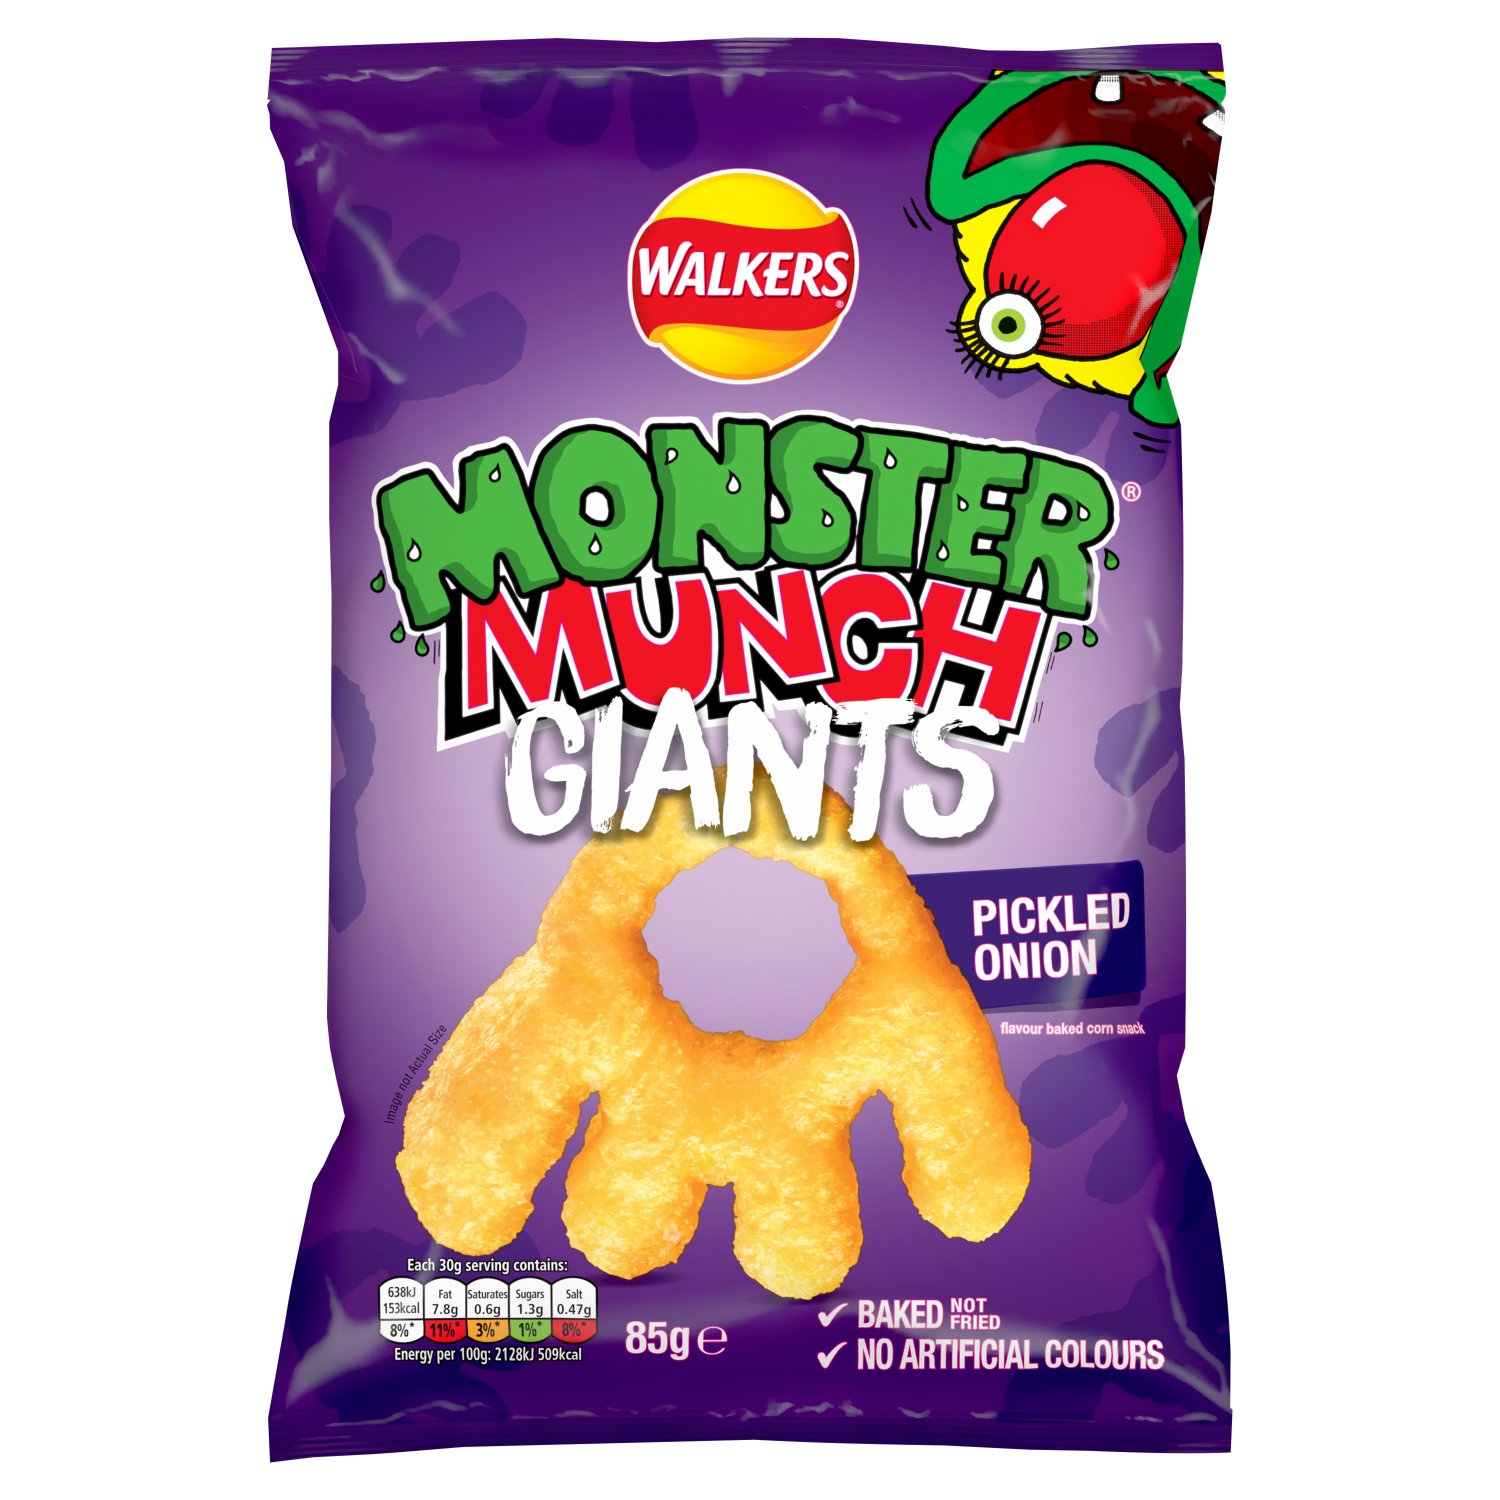 Monster Munch Giants Picked Onion (85 g)